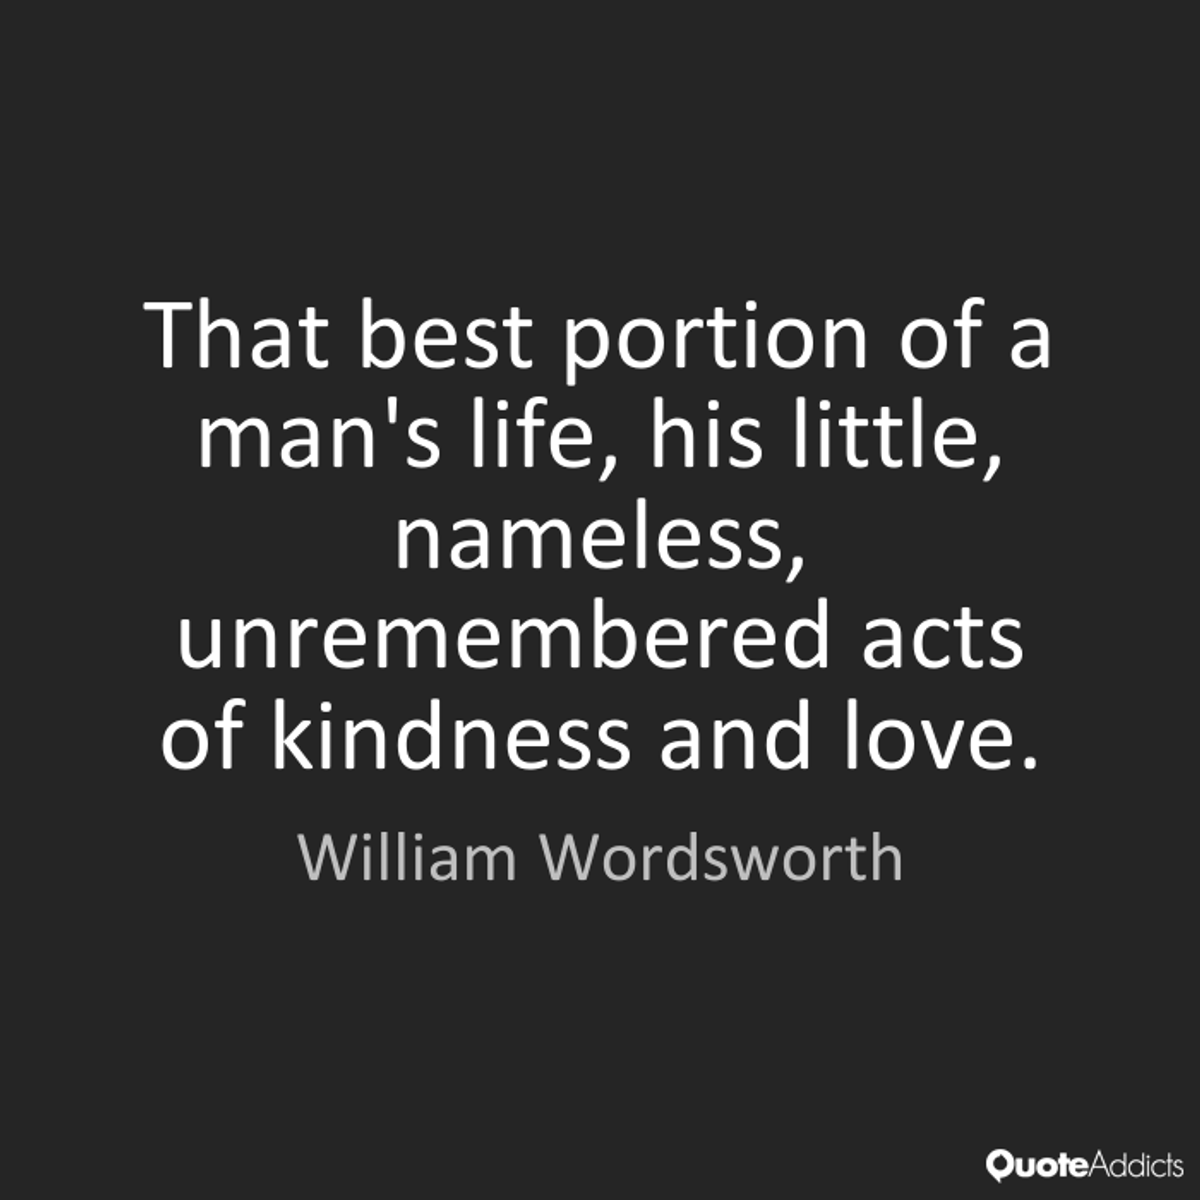 The Influence Of William Wordsworth